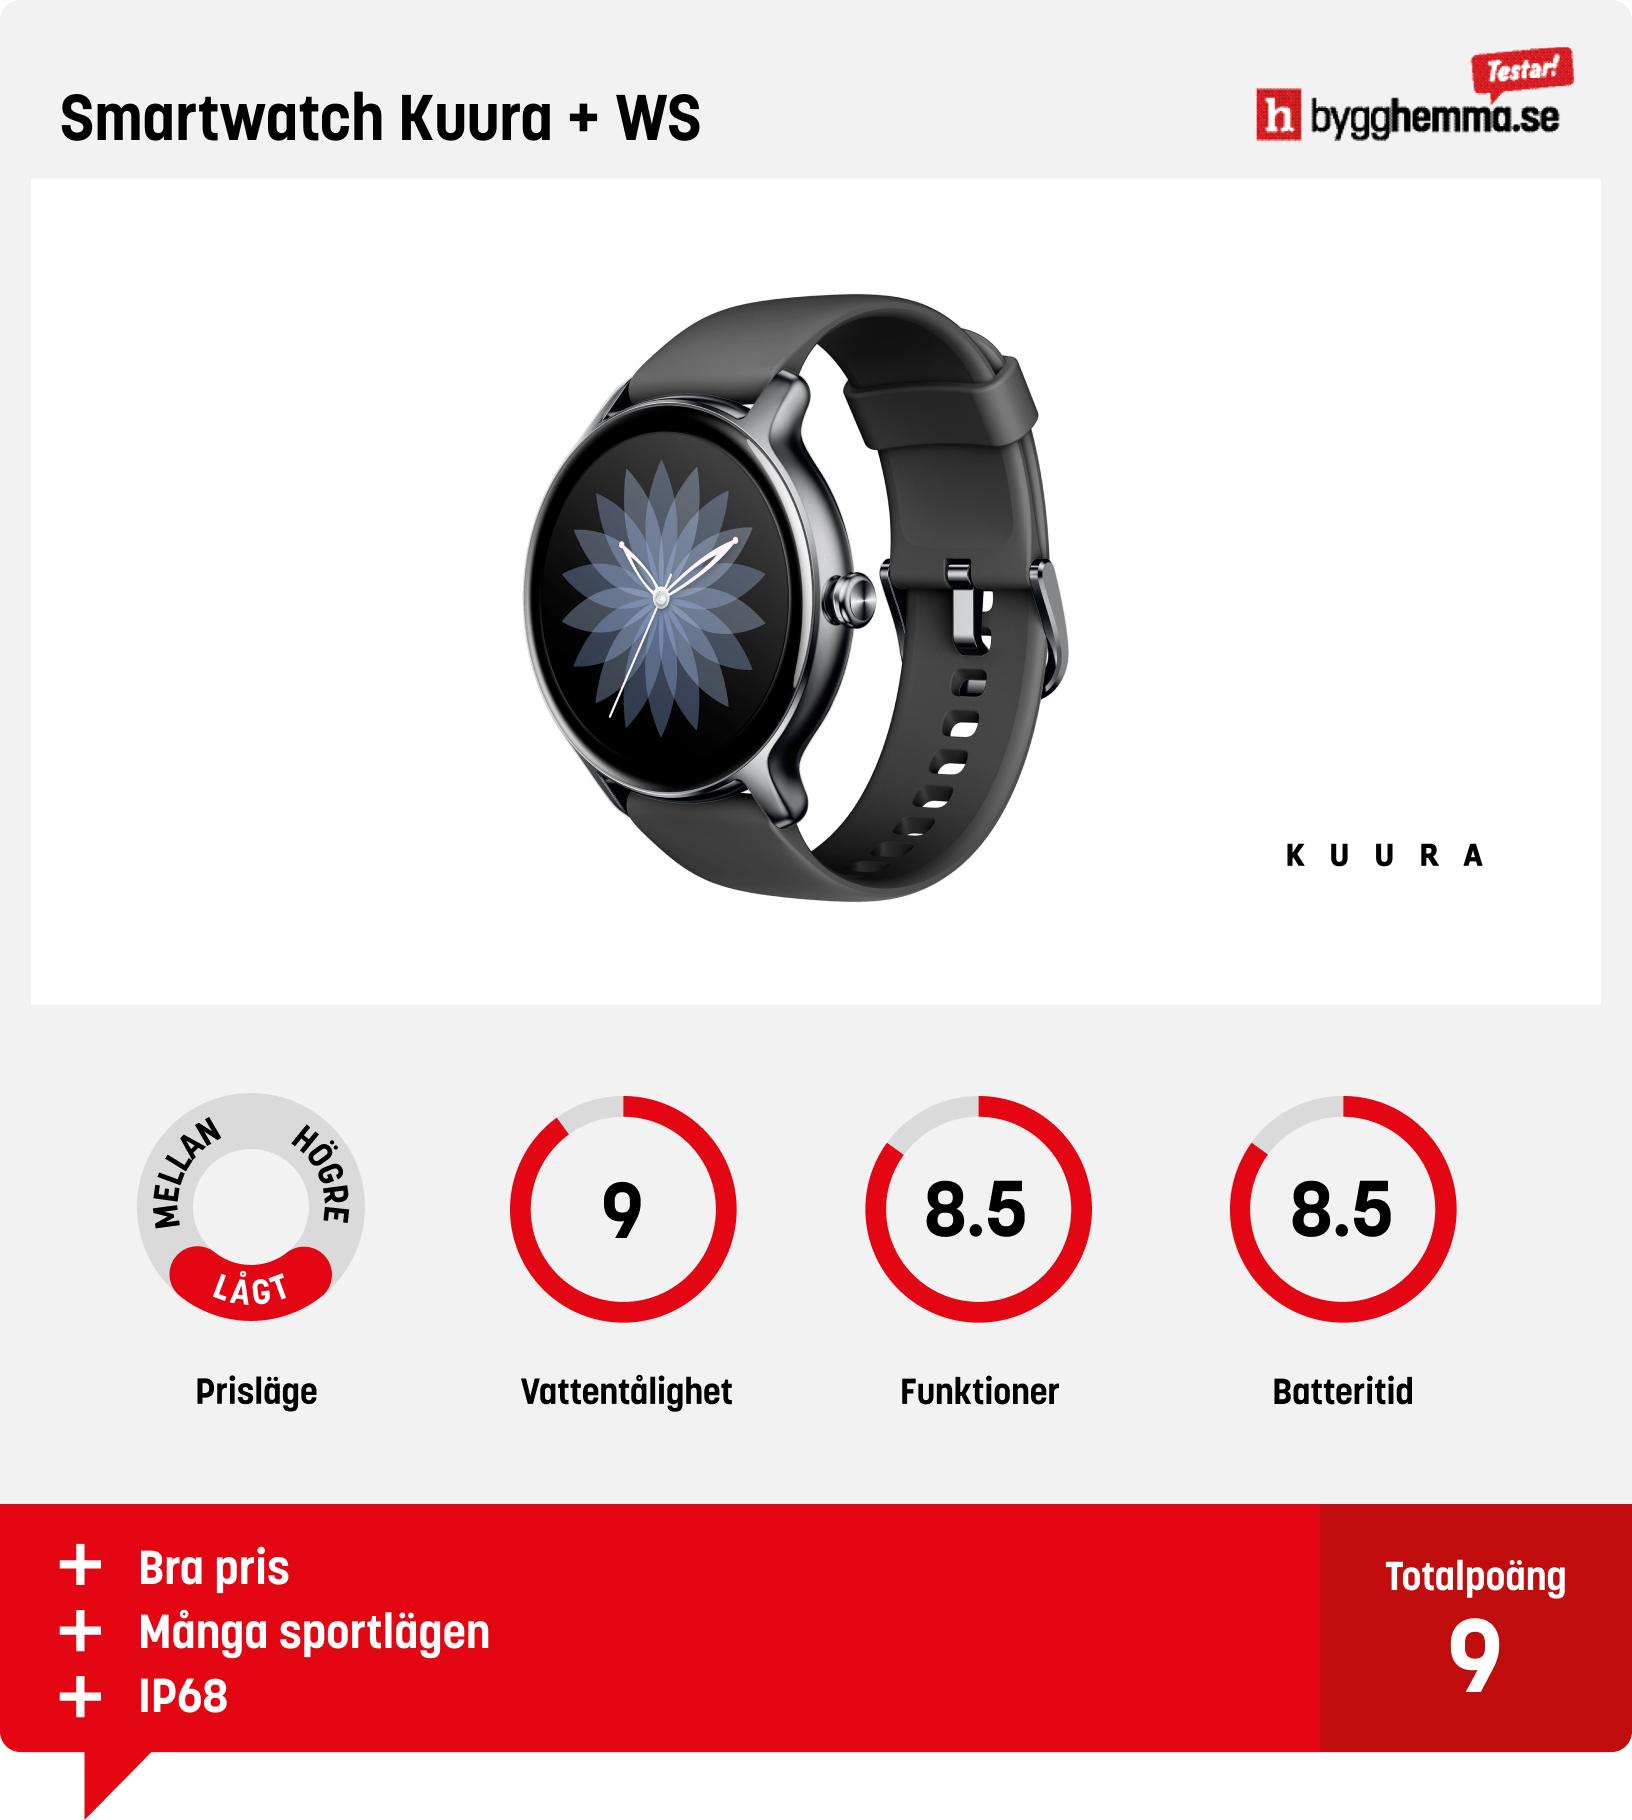 Smartwatch bäst i test